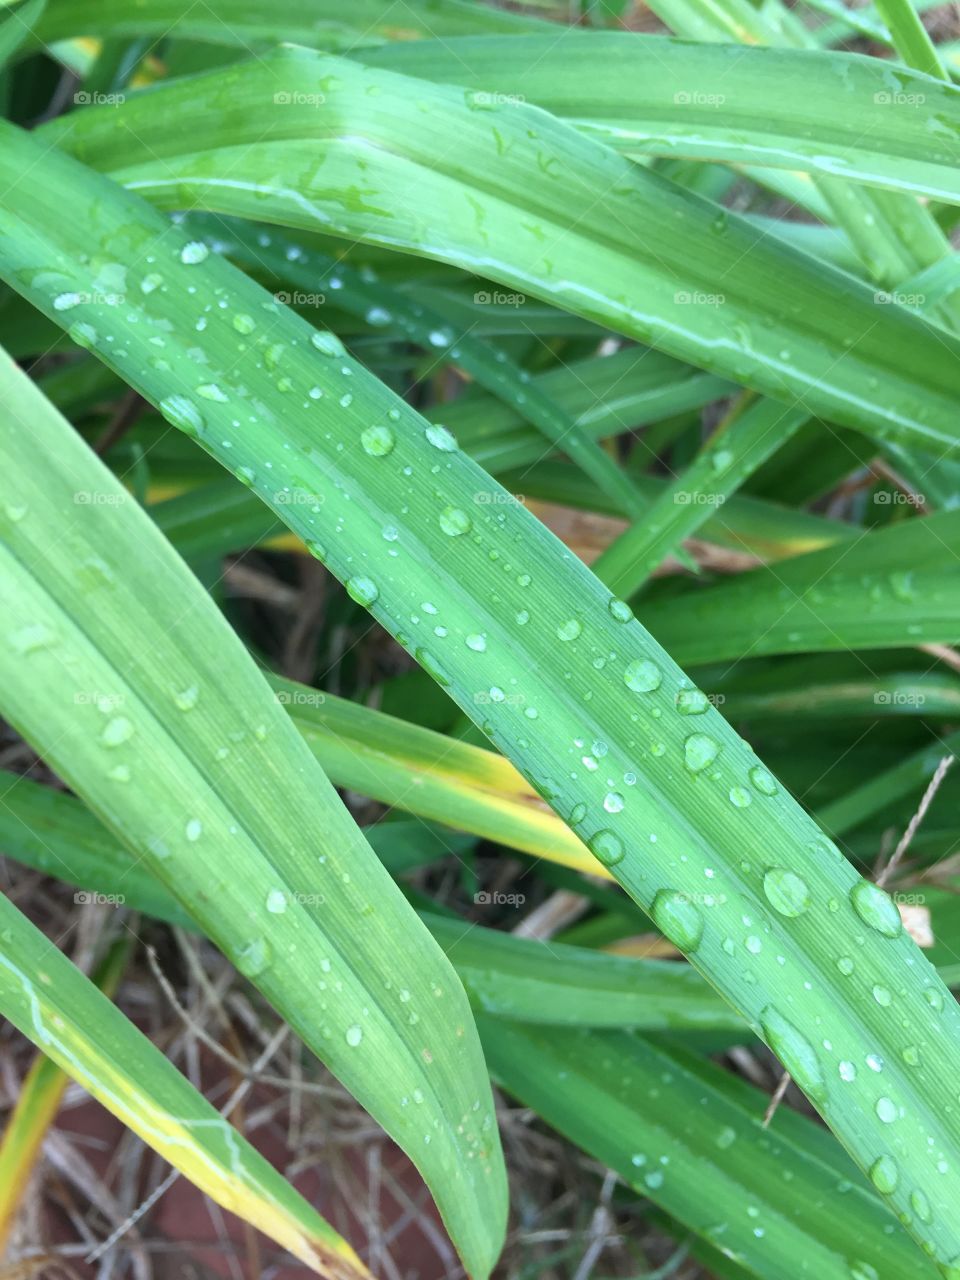 Raindrops on a plant